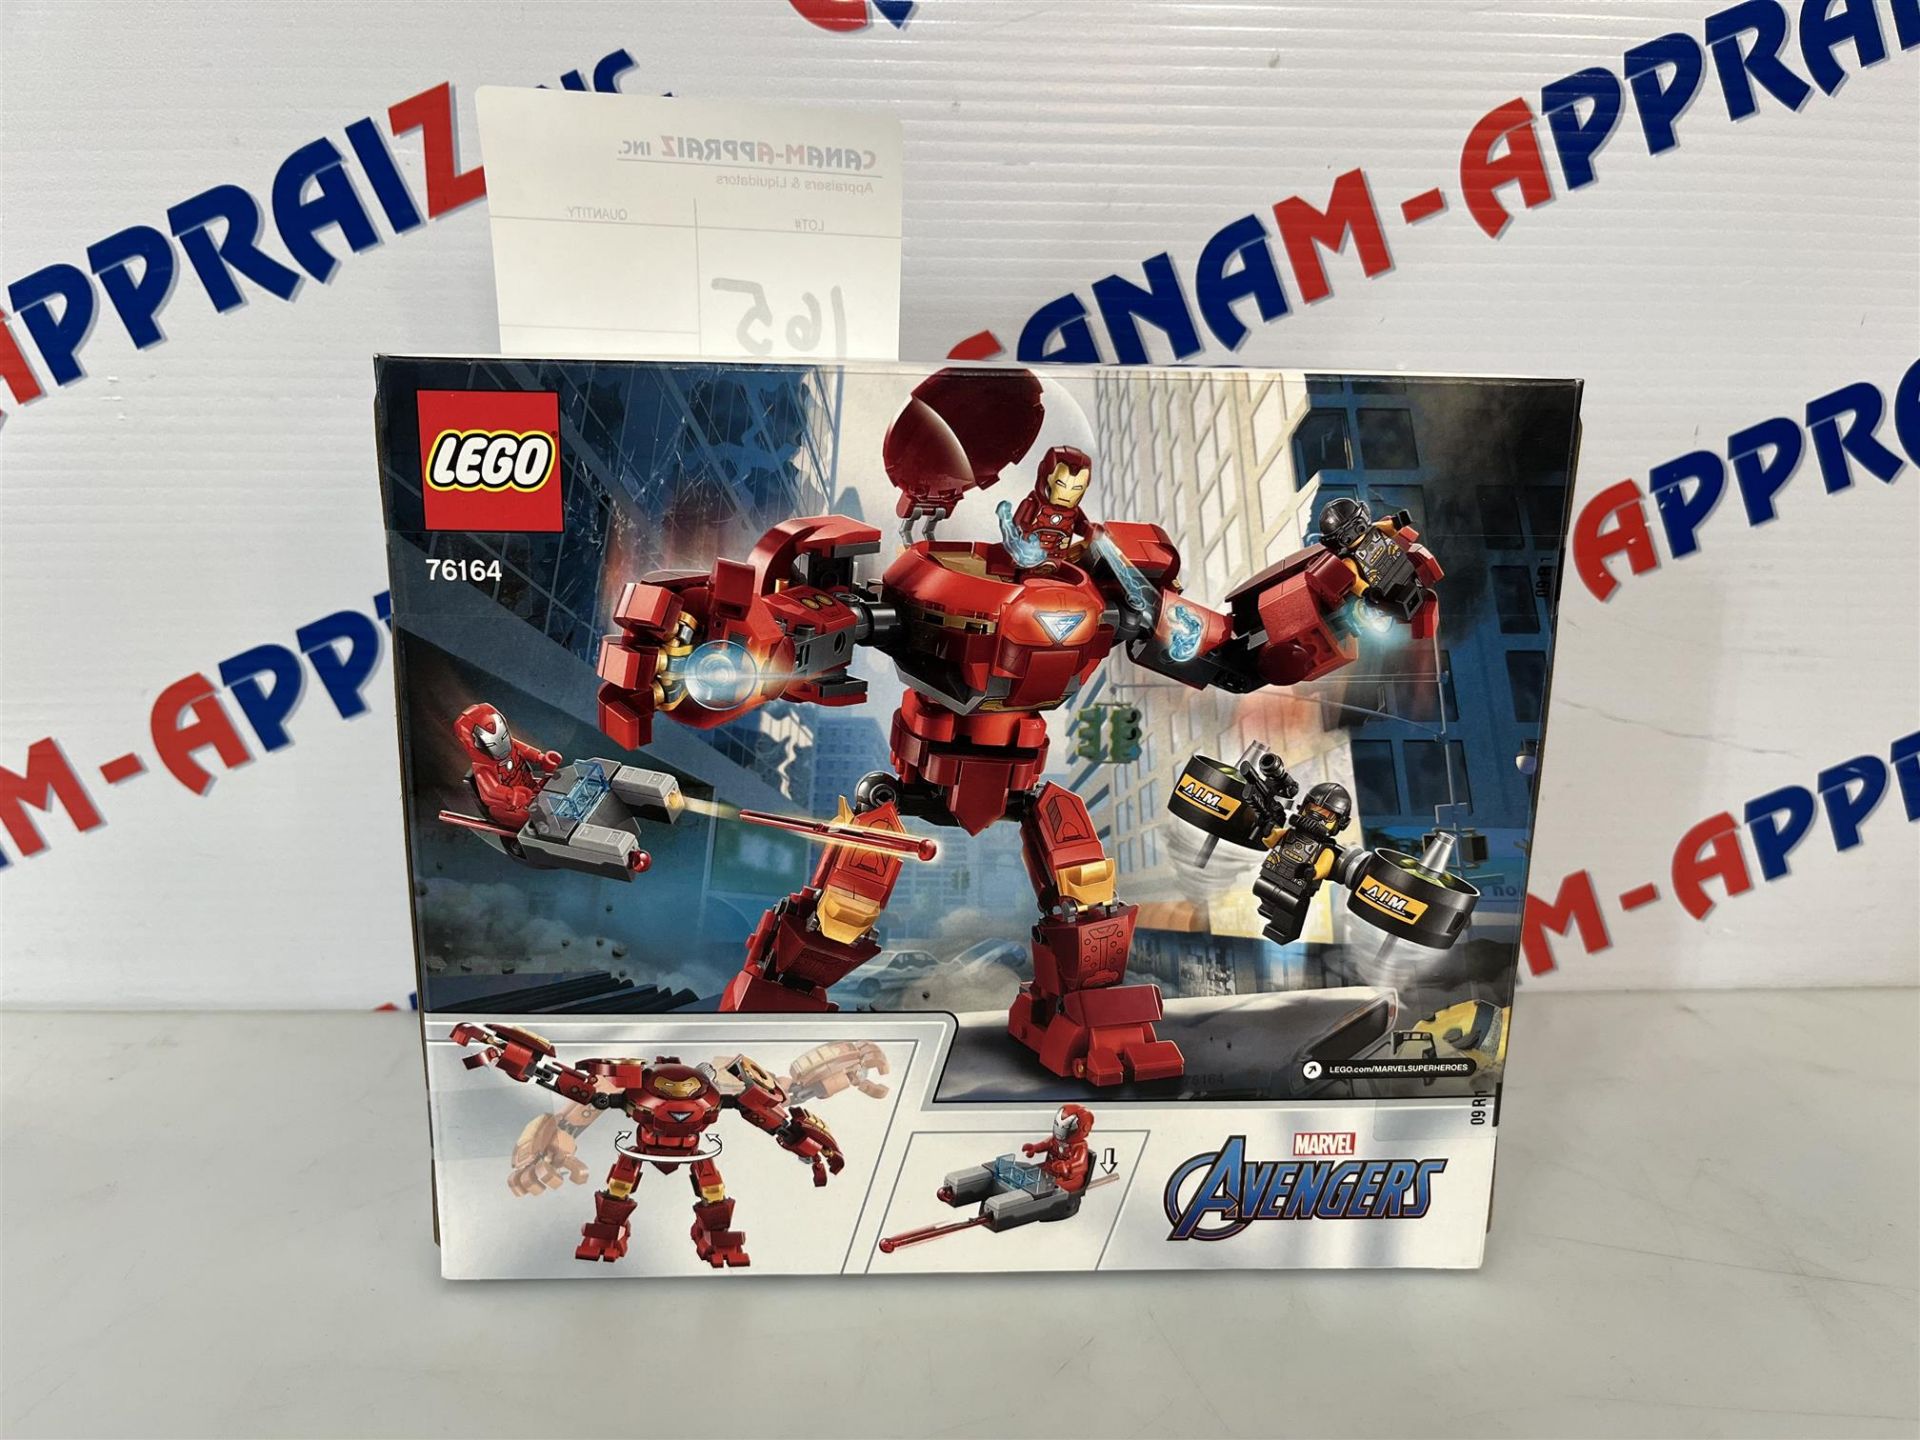 Lego AVENGERS Iron Man Hulkbuster Versus A.I.M. Agent 76164 - Ages 8+ - 564 PCS - Image 2 of 2